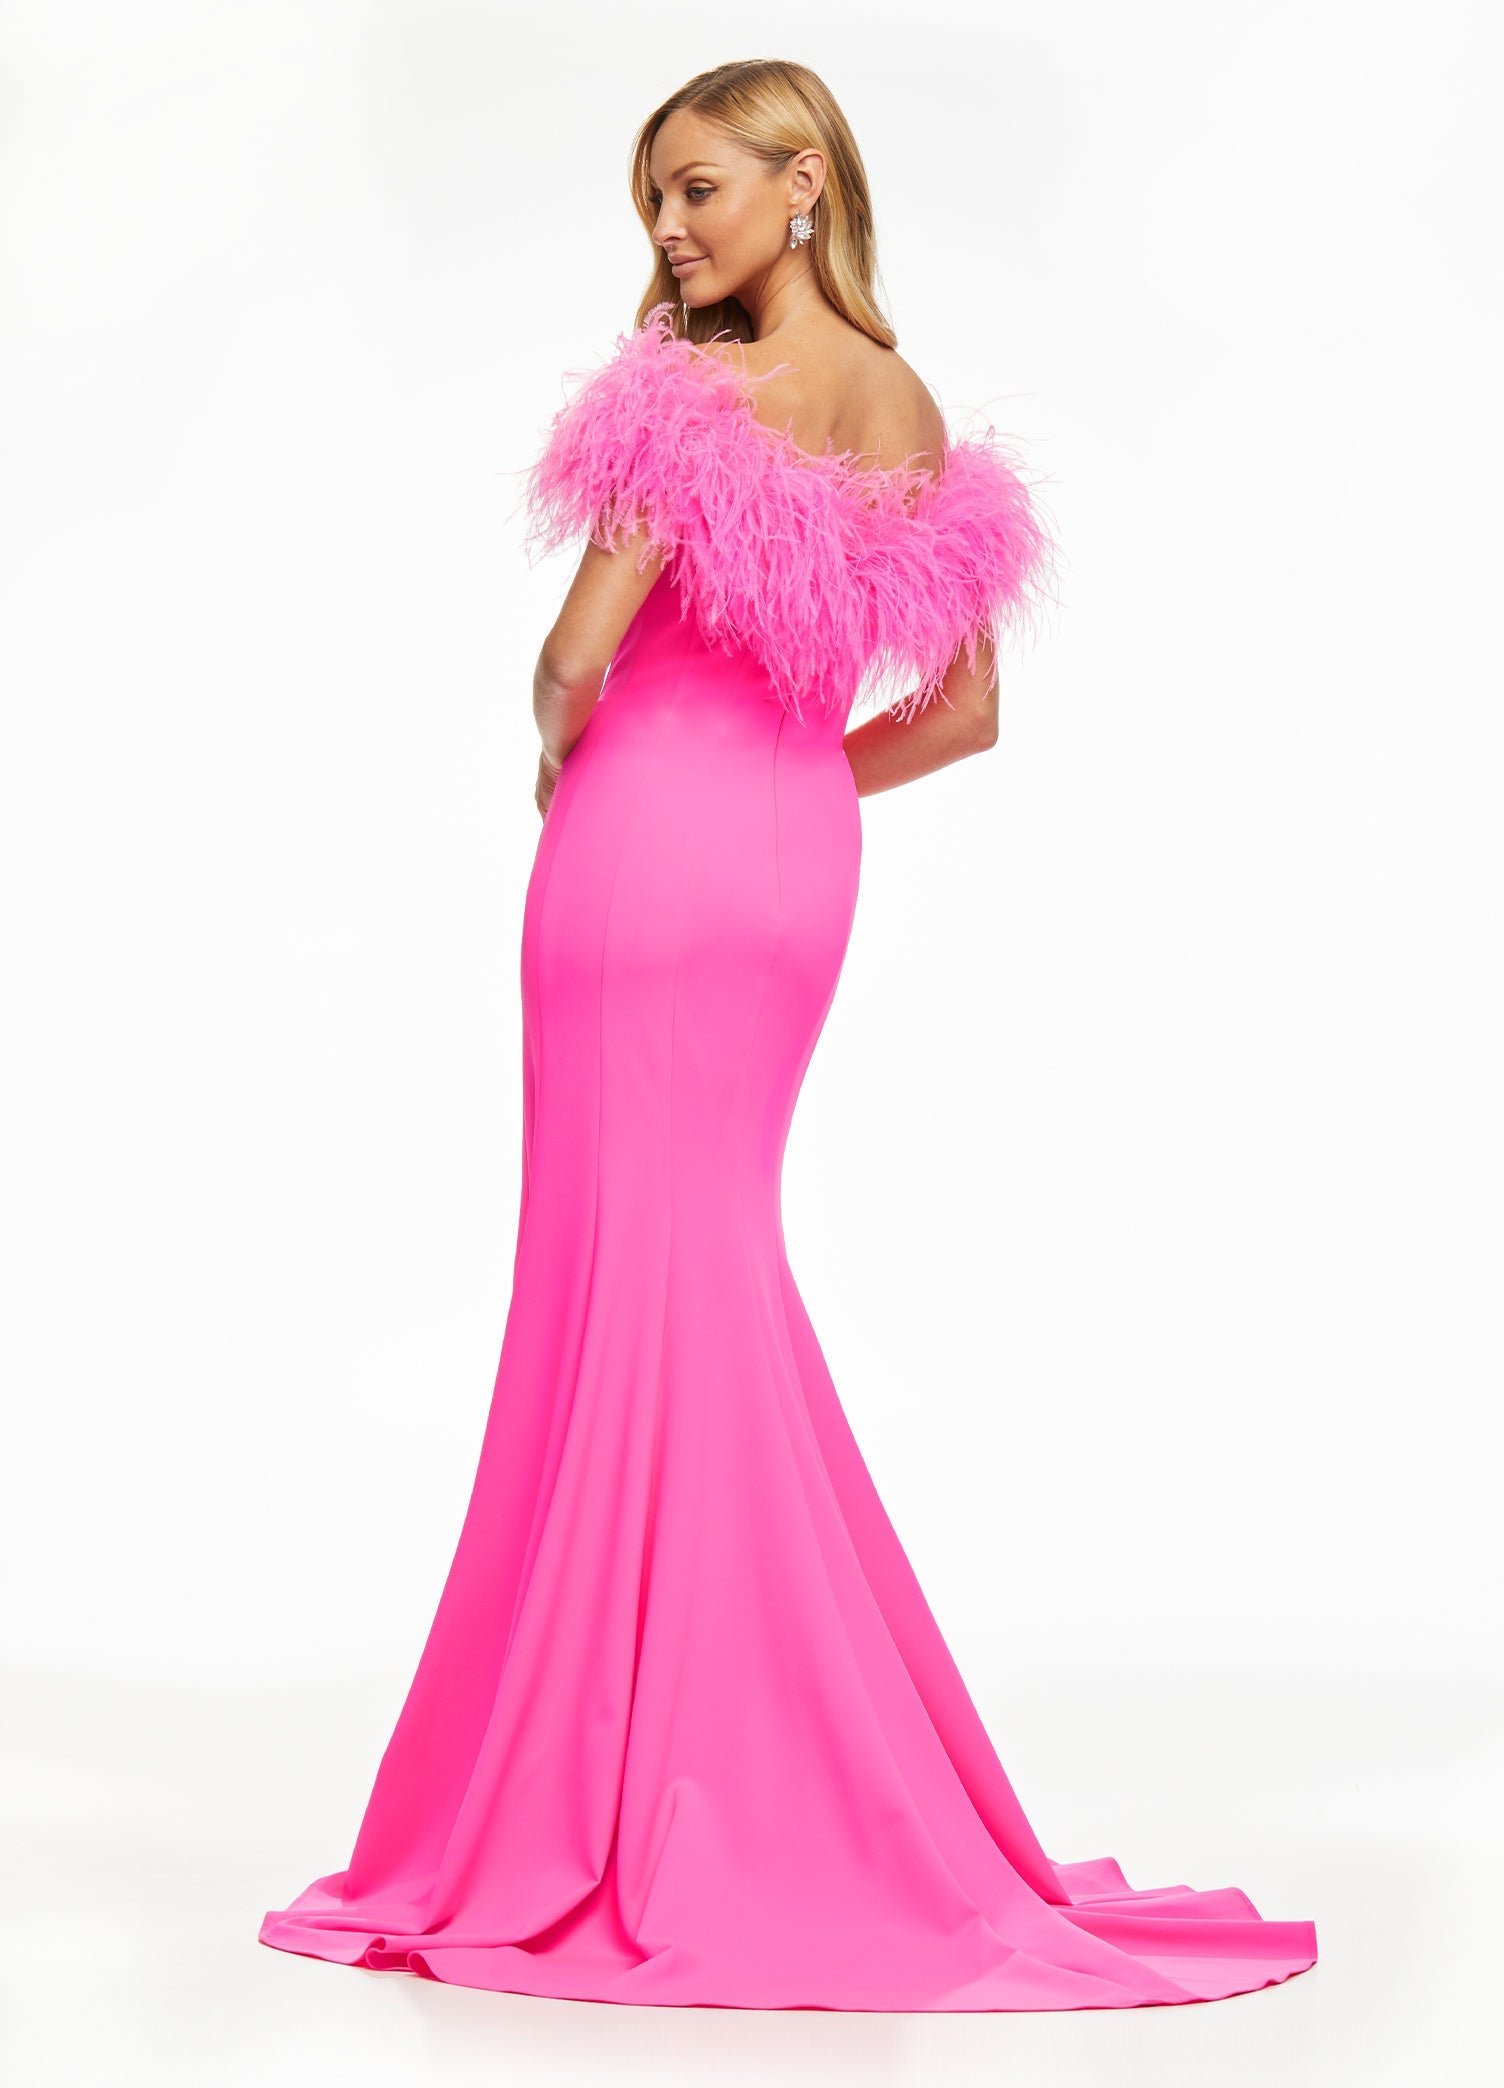 Ashley-Lauren-11101-hot-pink-pageant-dress-back-two-tone-plunging-sweetheart-neckline-off-the-shoulder-feather-wrap-left-leg-slit